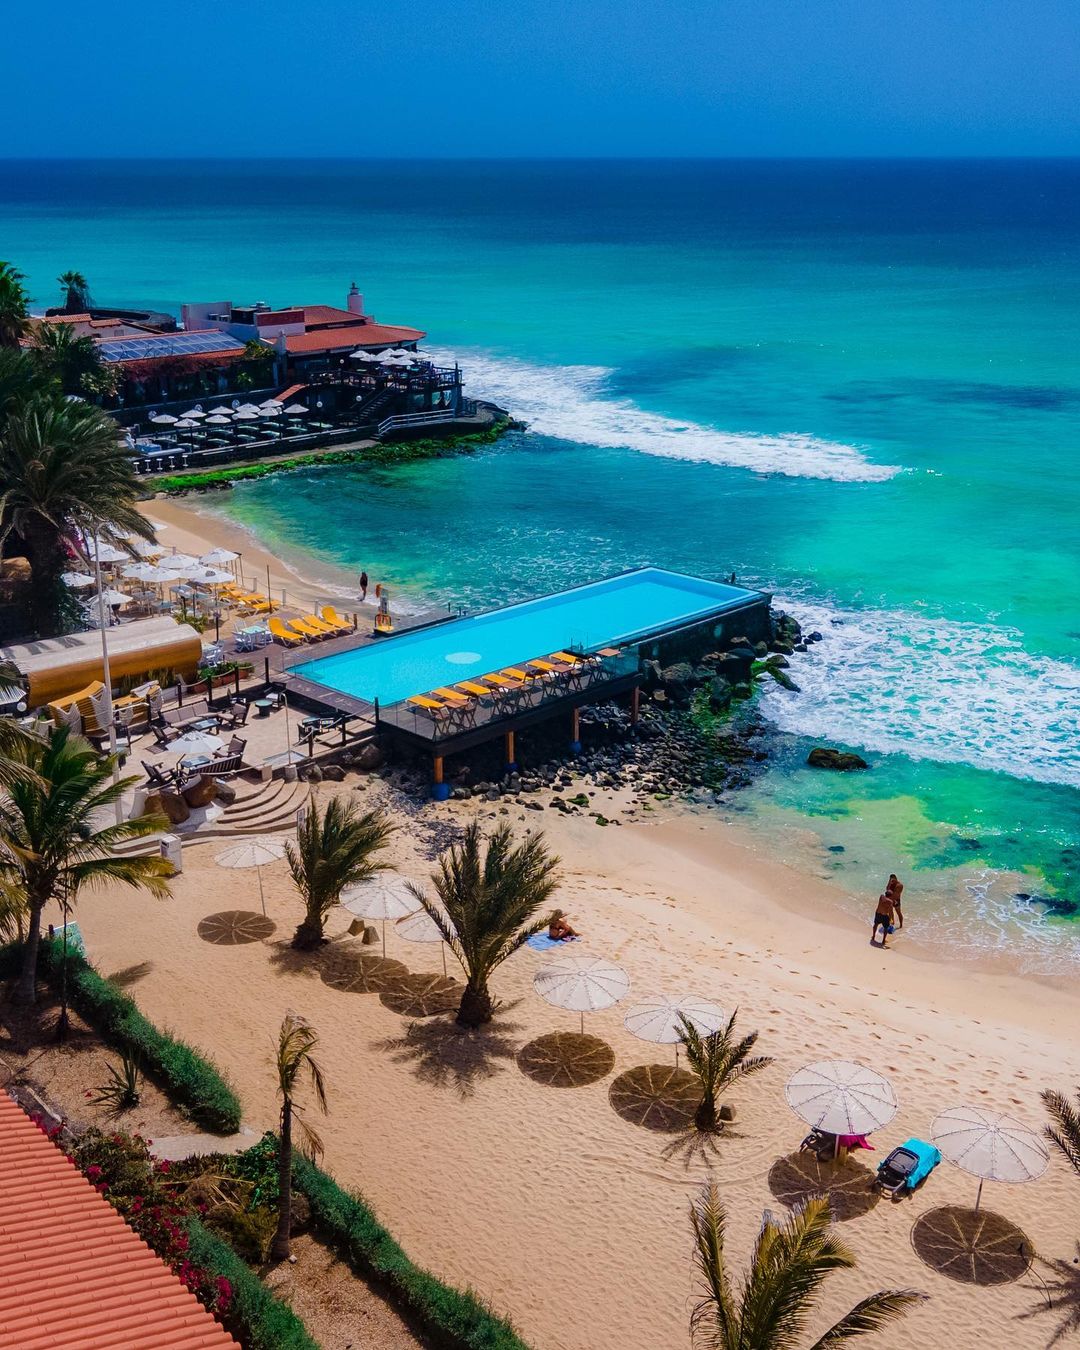 Cape Verde and Kenya 10 best beach destinations in Africa